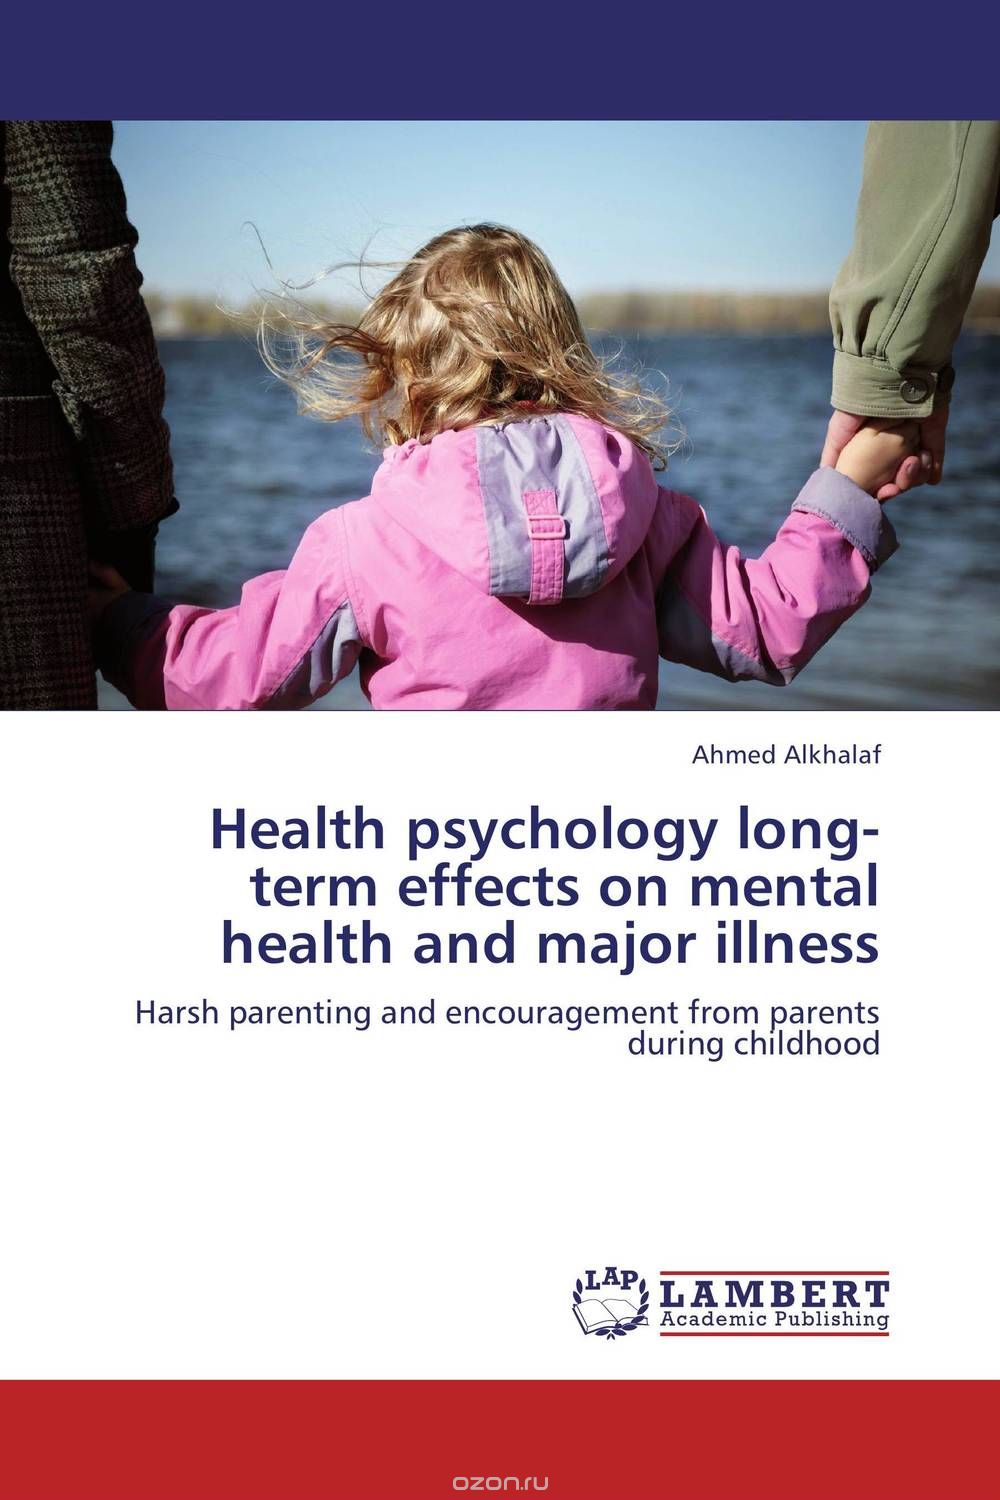 Скачать книгу "Health psychology long-term effects on mental health and major illness"